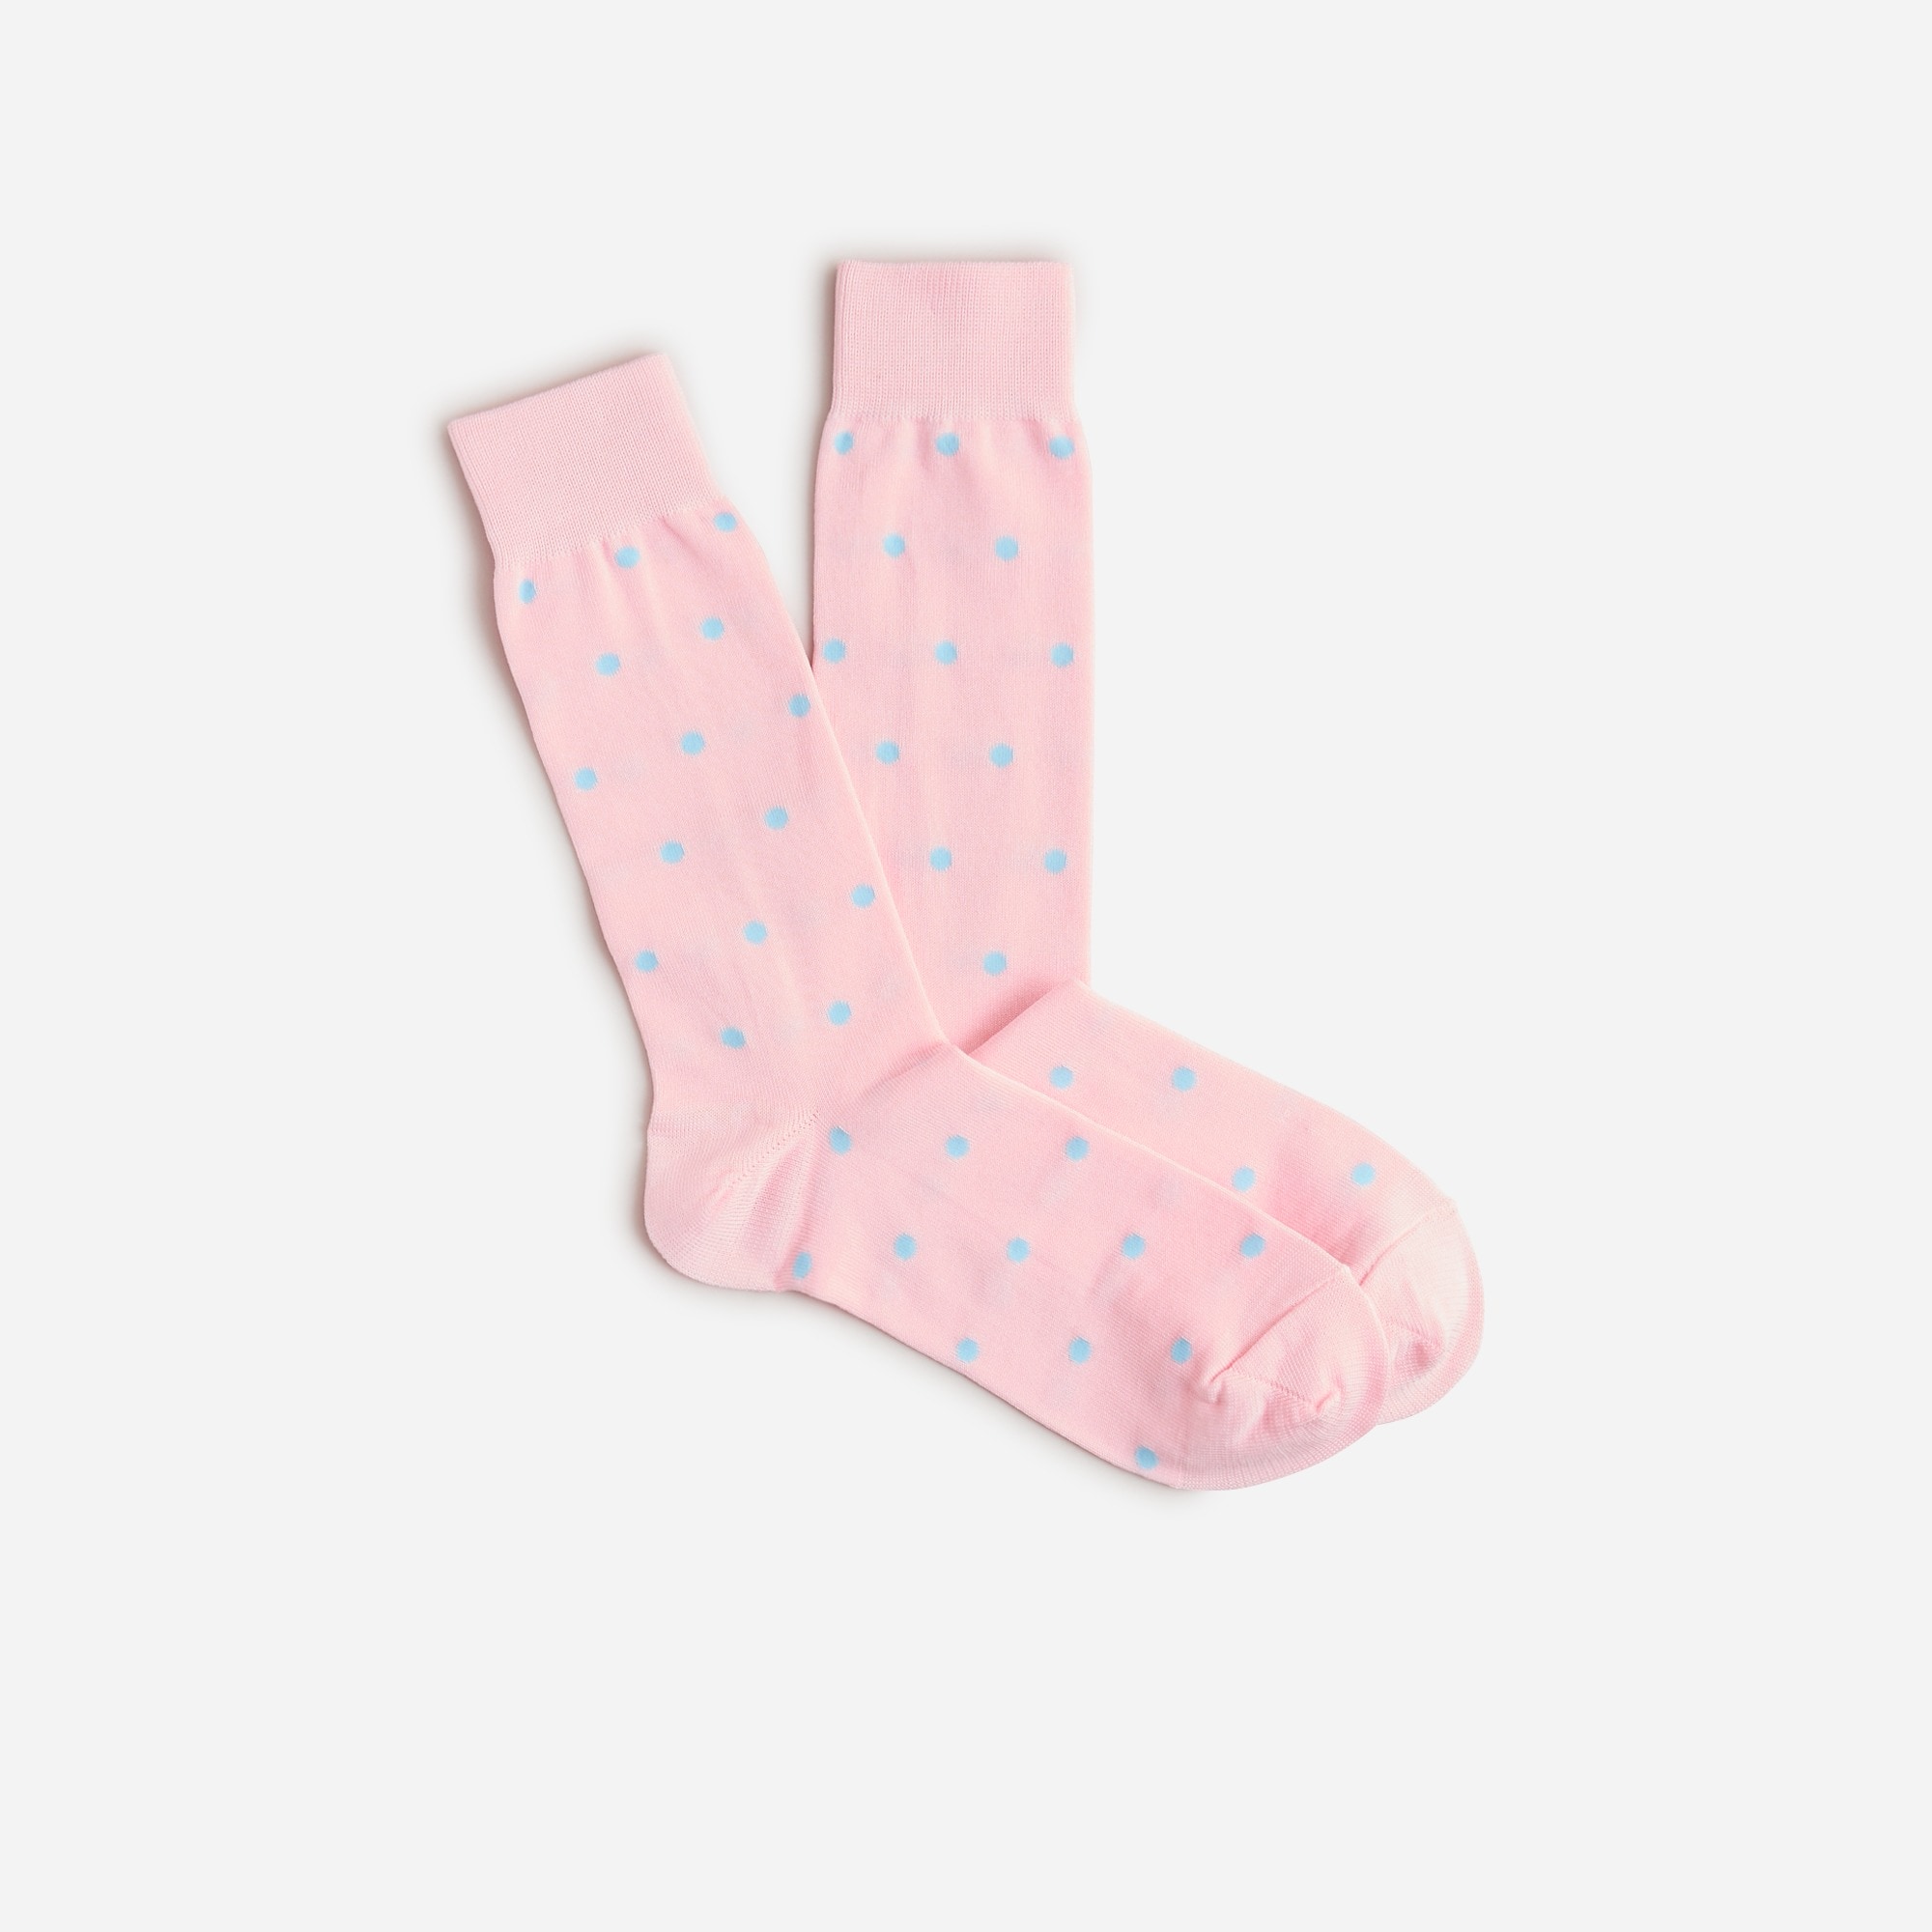  Dress socks in dots